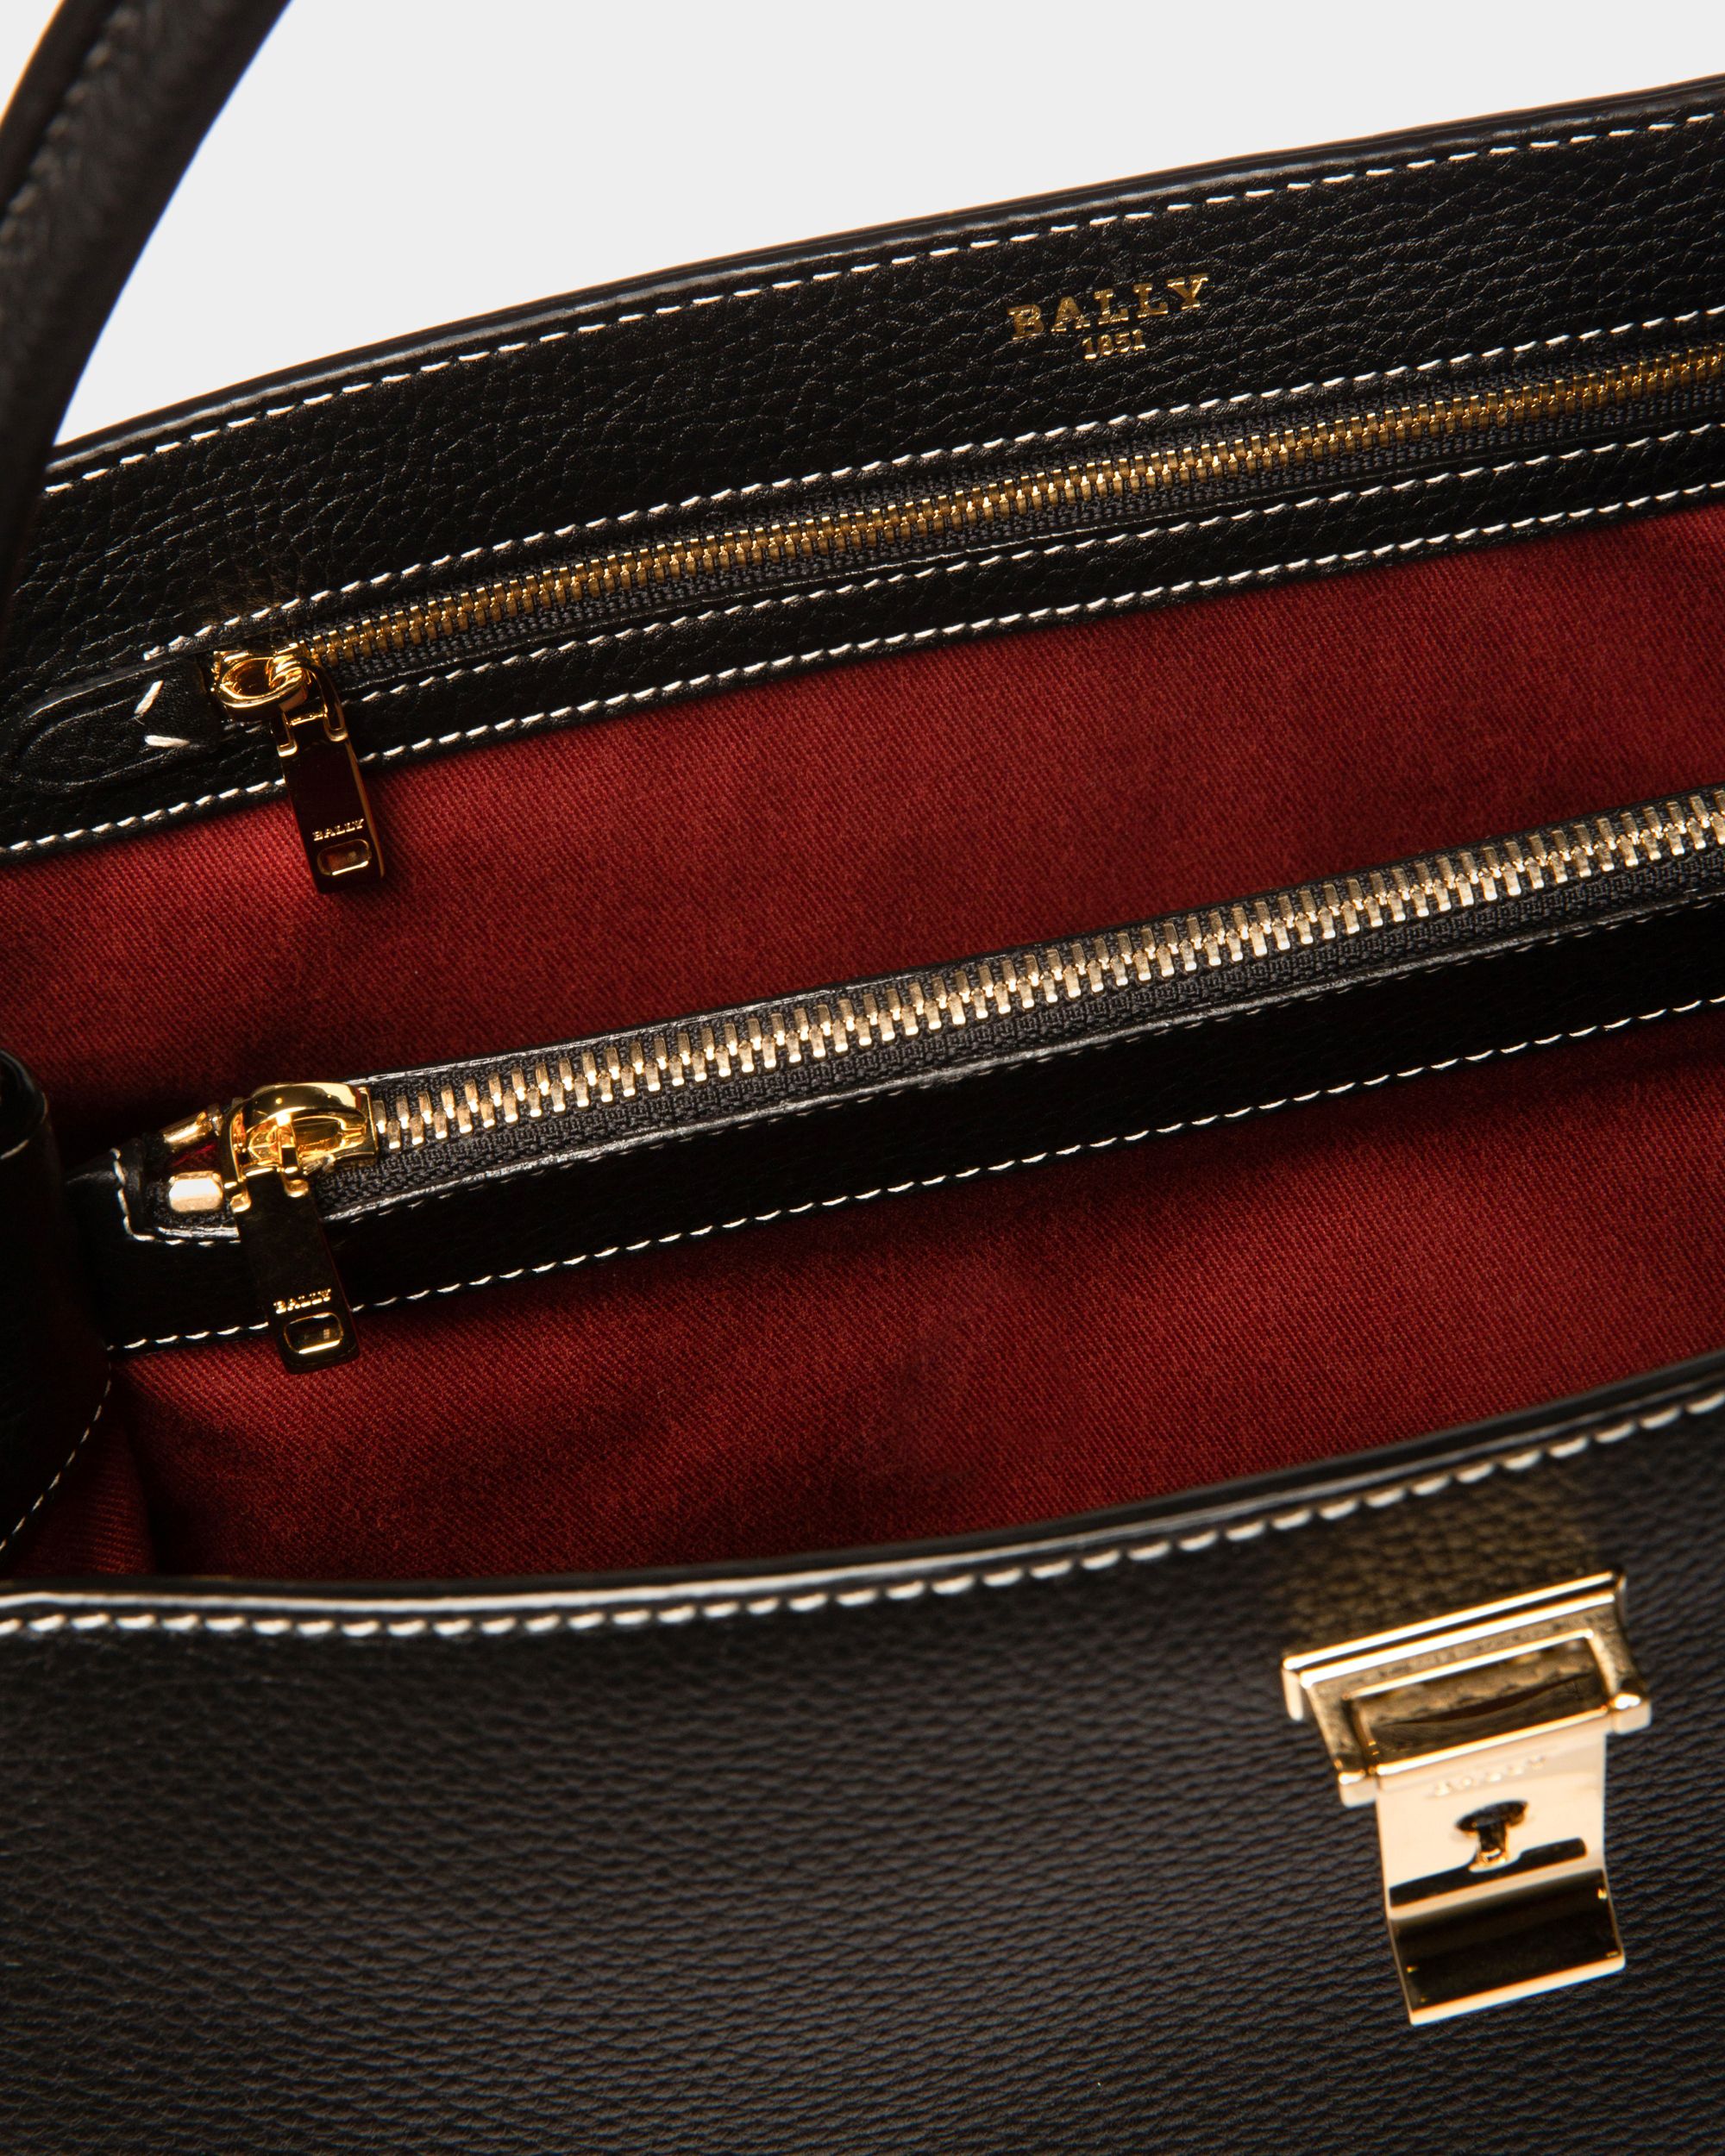 Layka | Women's Top Handle Bag | Black Leather | Bally | Still Life Open / Inside